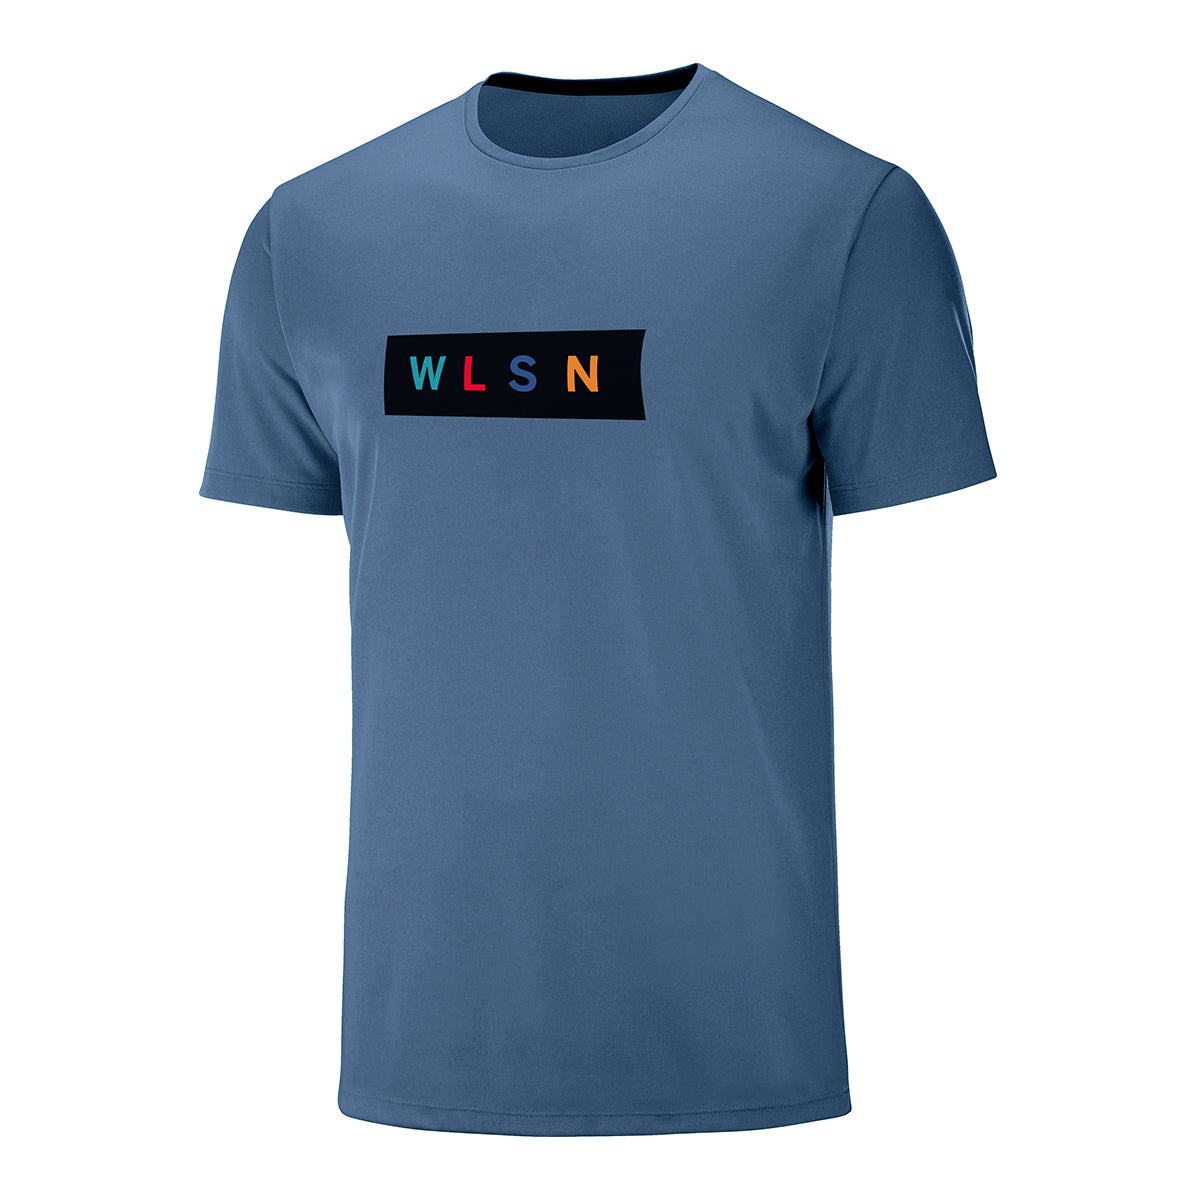 Camiseta WLSN